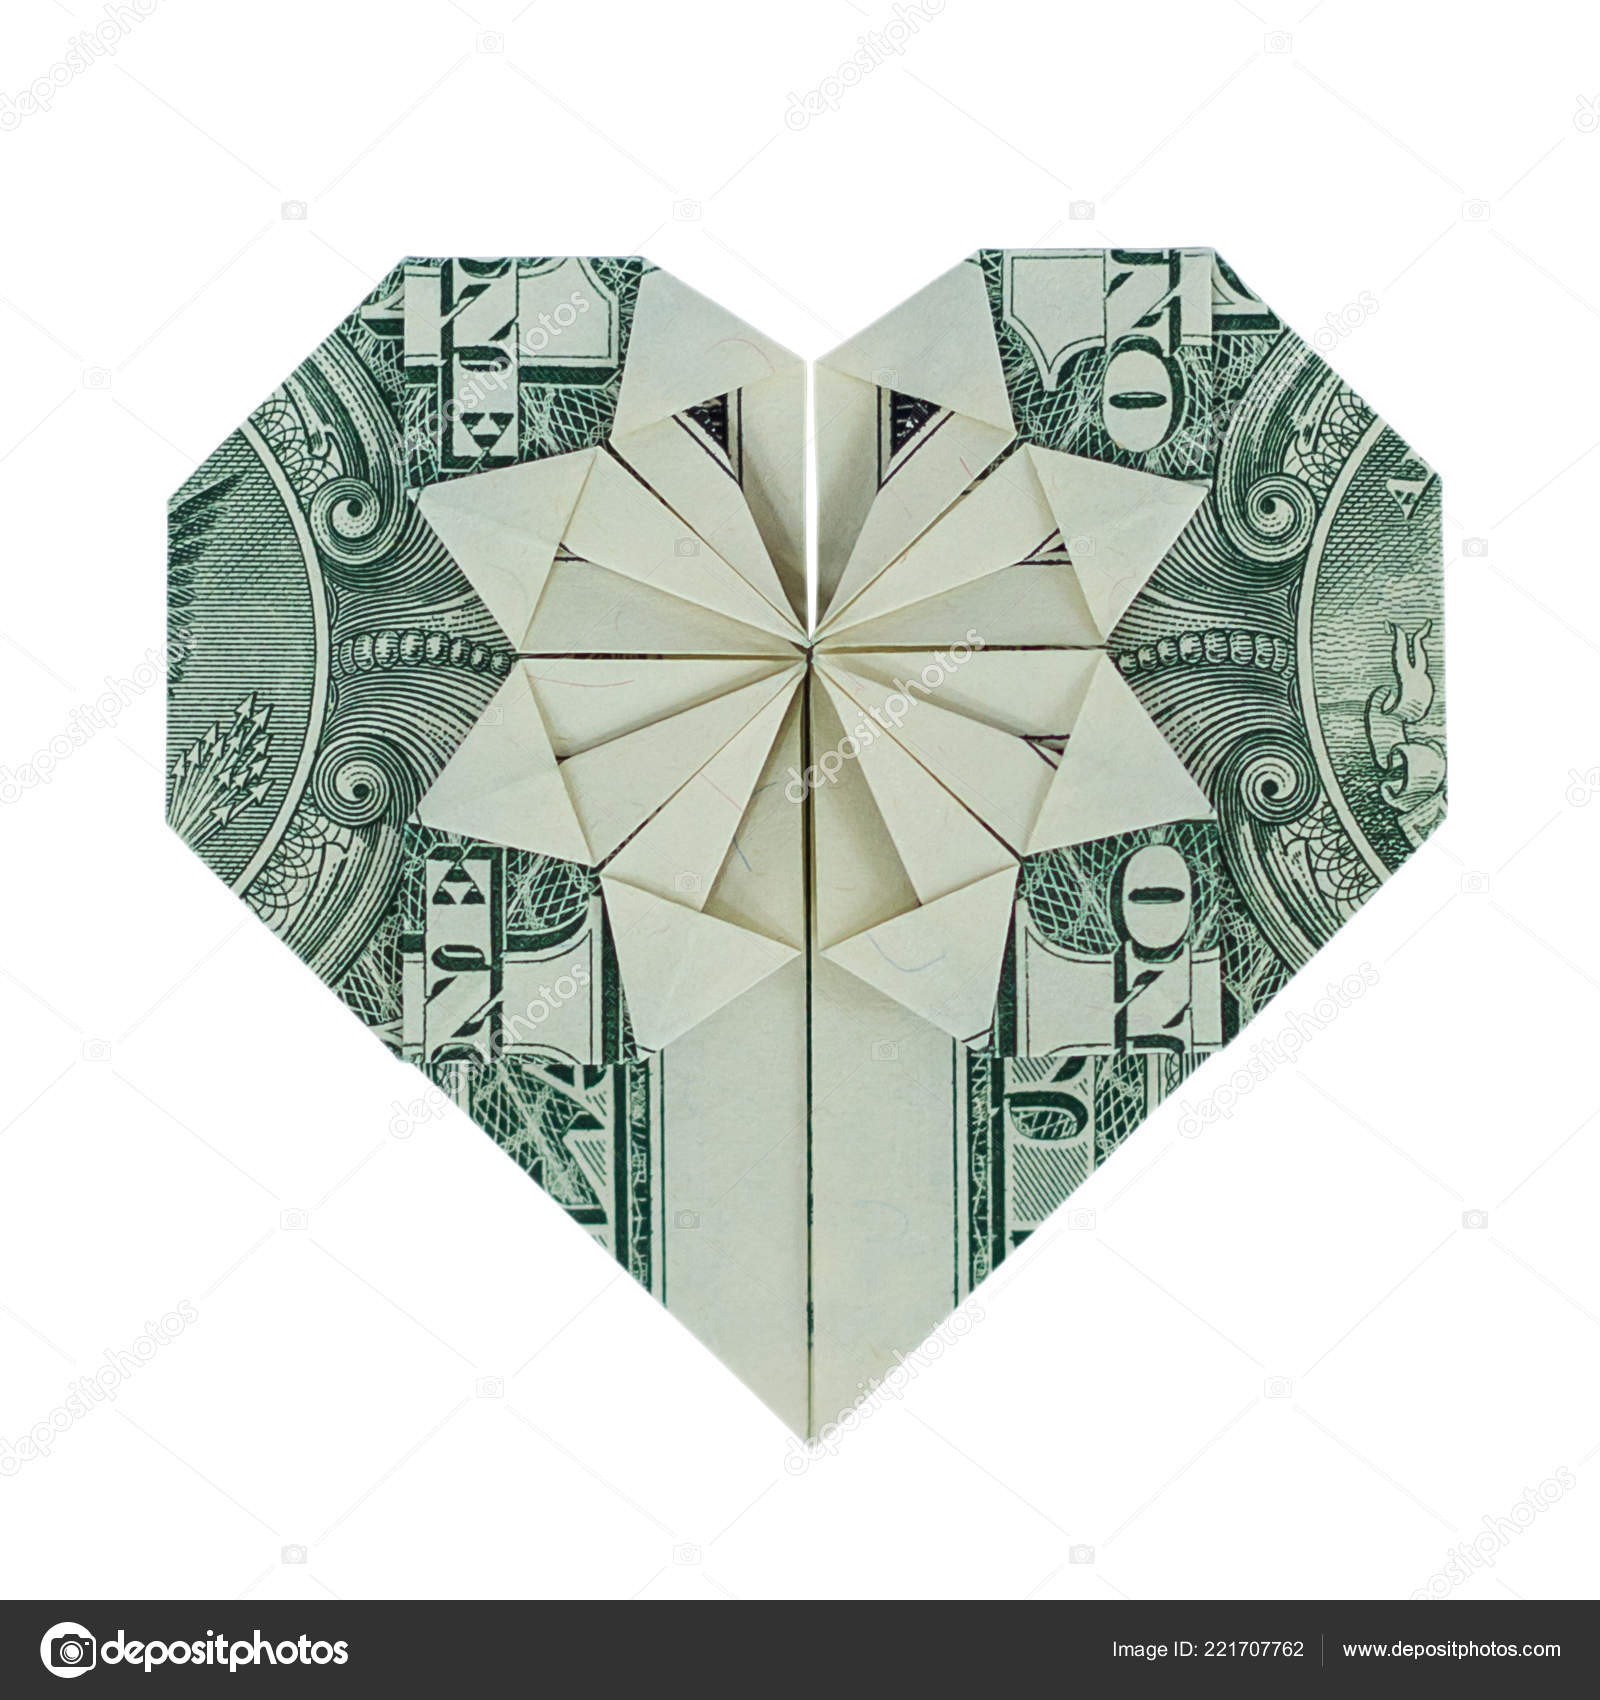 Origami Dollar Bill Money Origami Heart Folded Real One Dollar Bill Isolated White